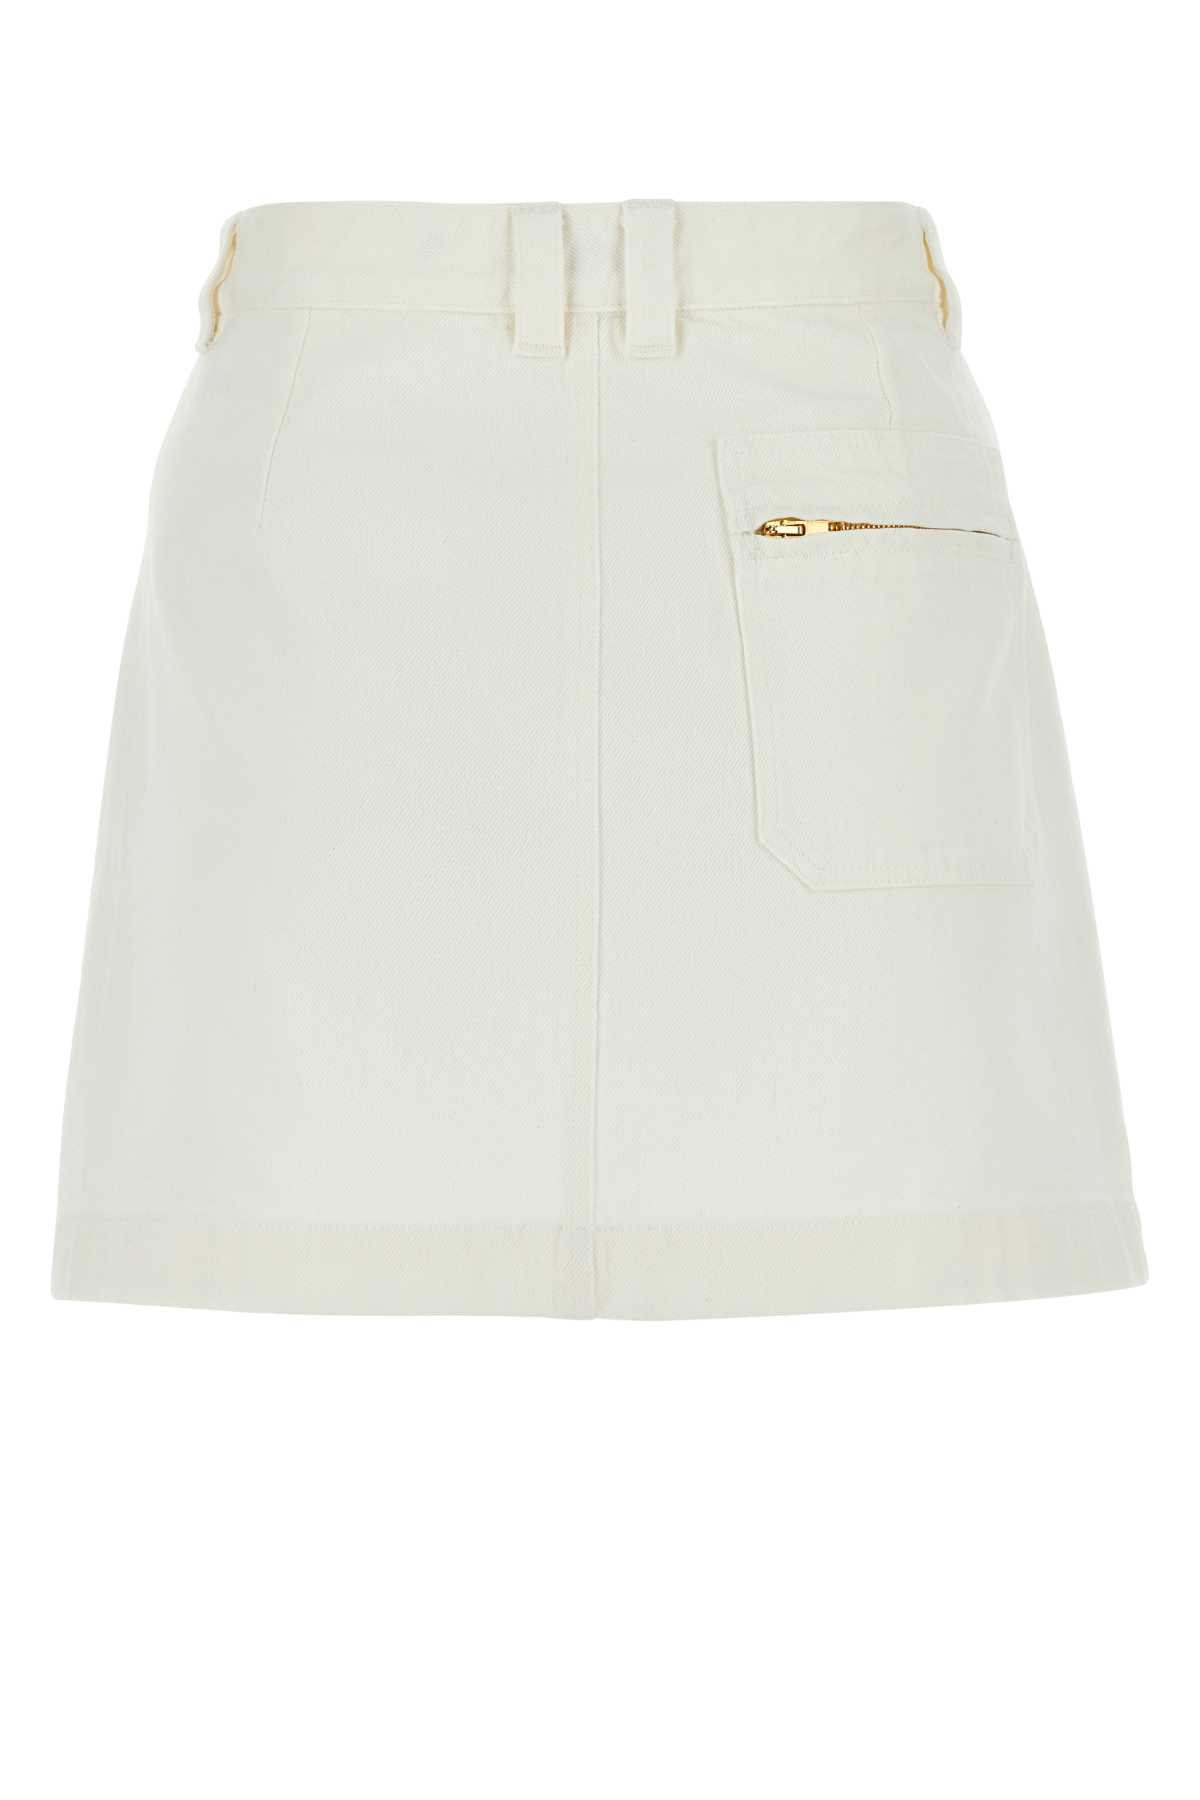 Apc White Denim Sarah Mini Skirt In Offwhite